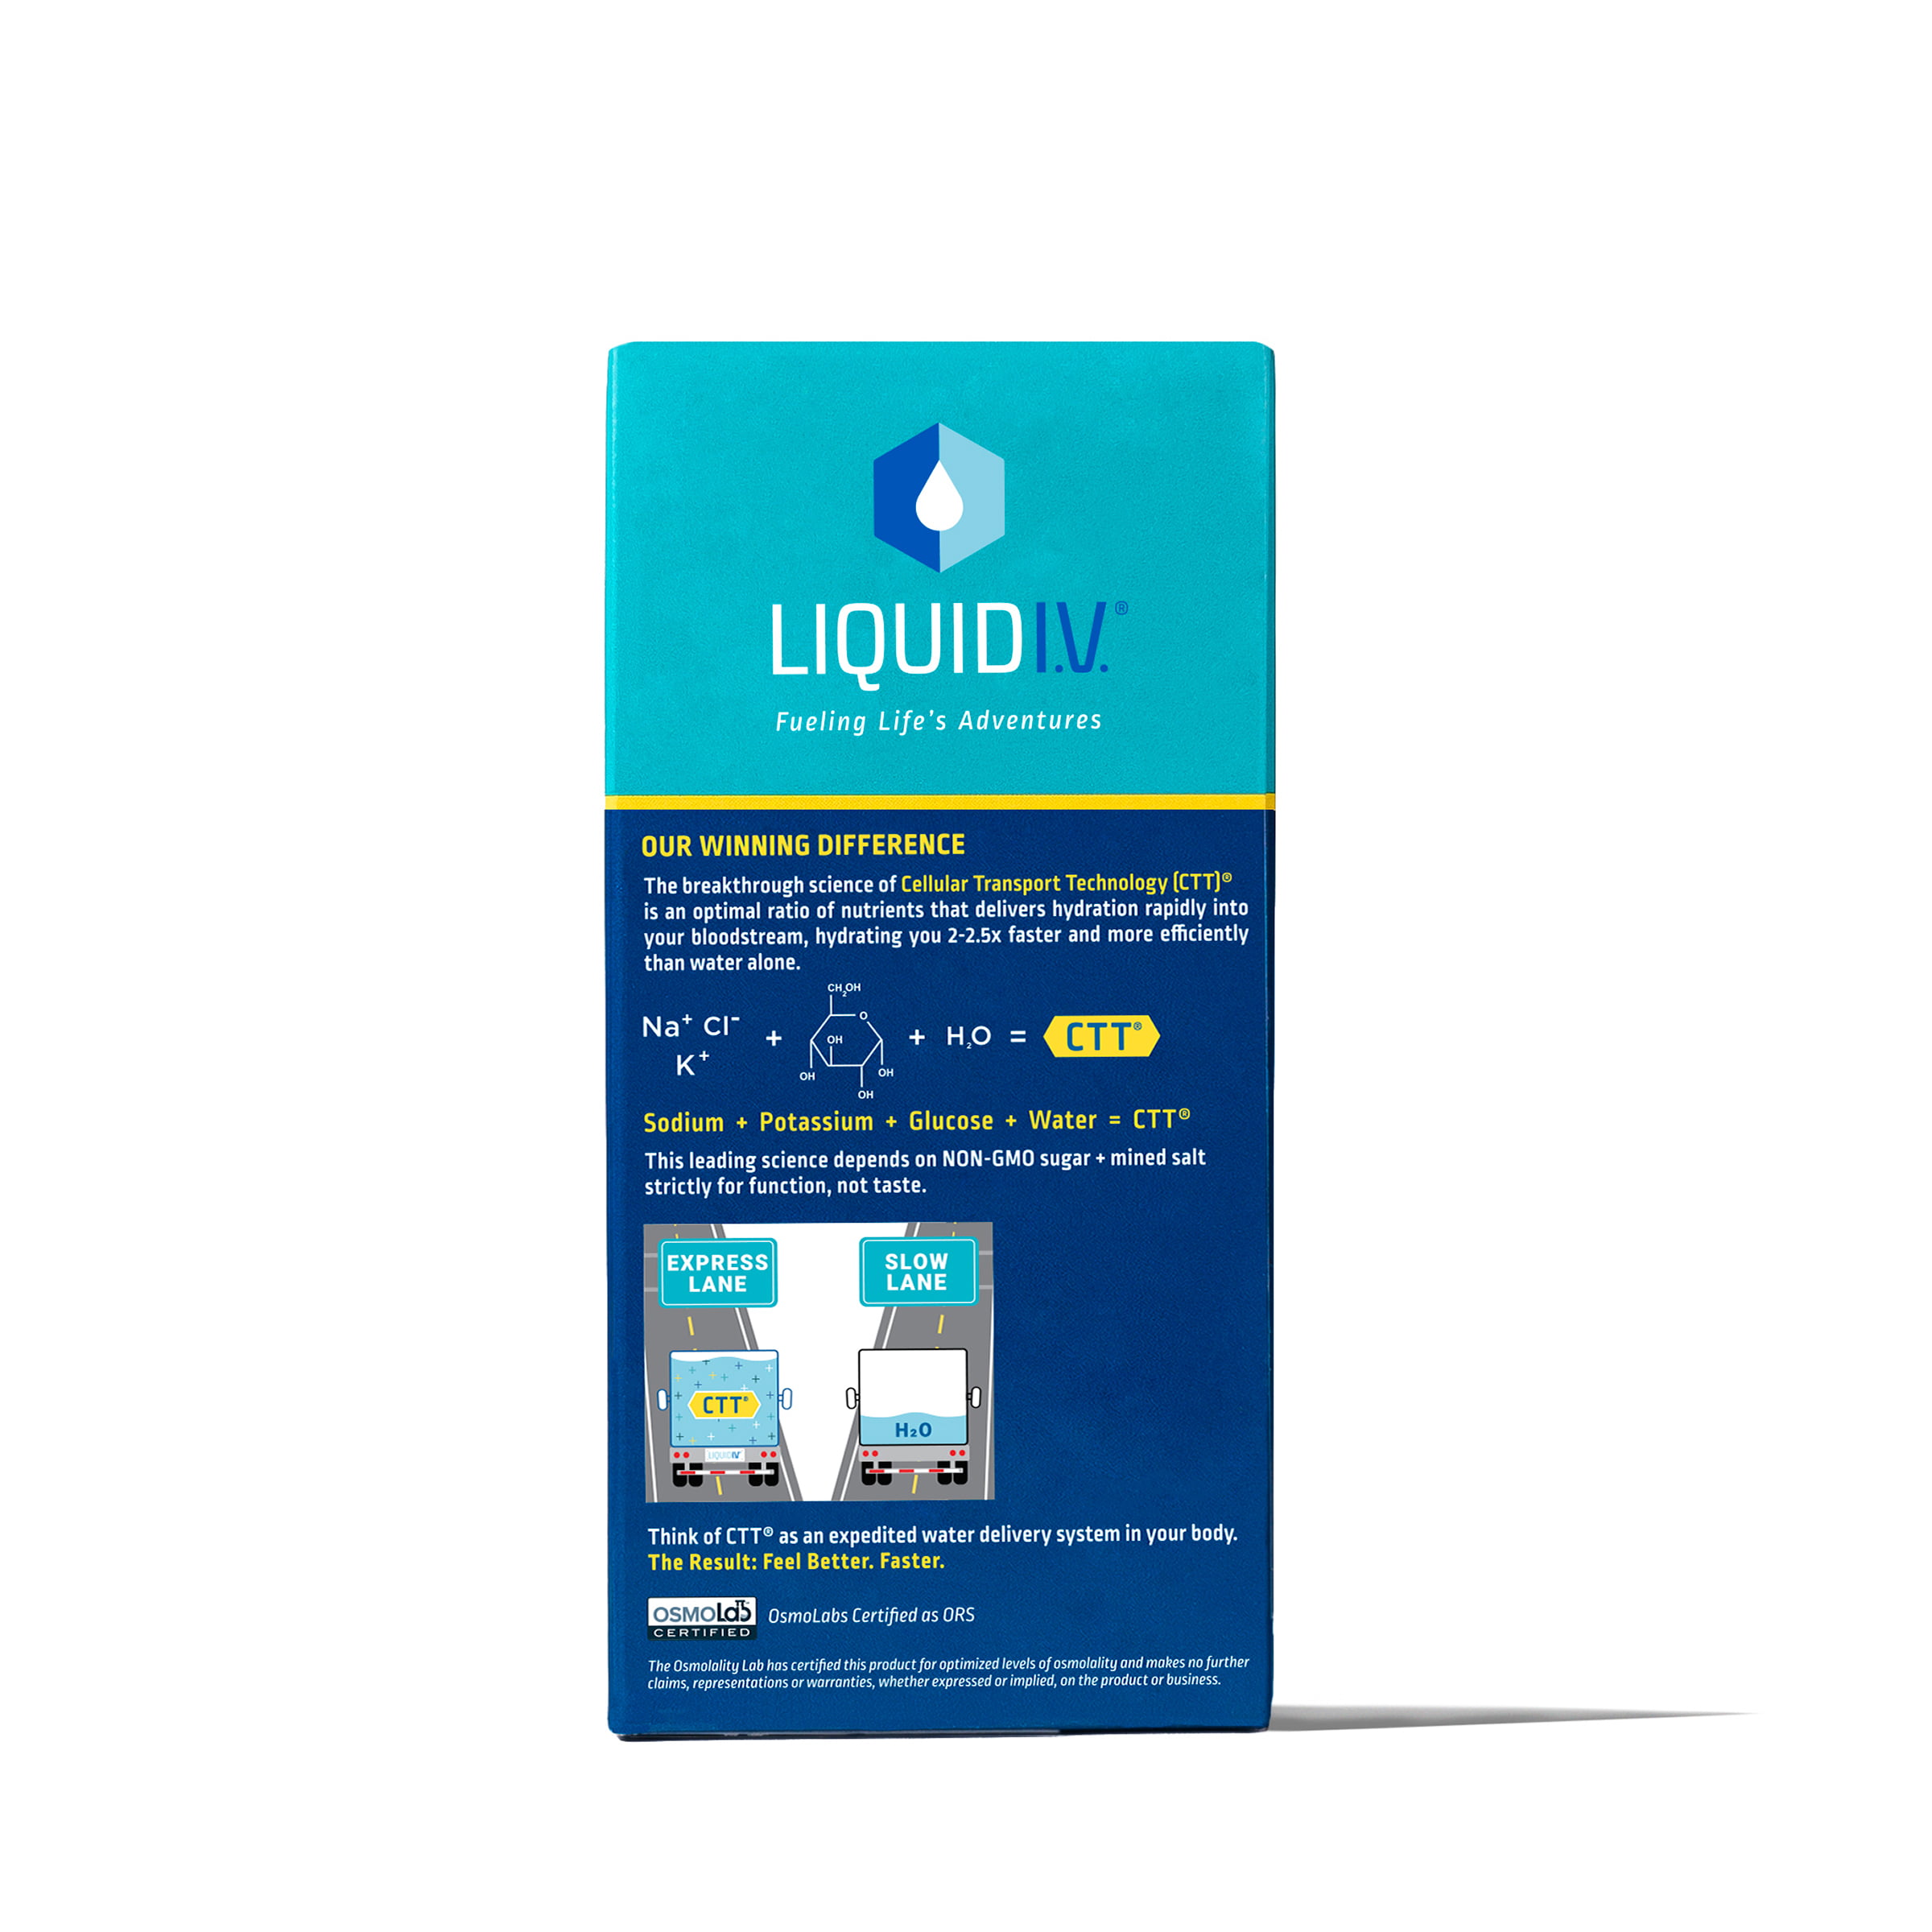 Liquid I.V. Hydration Multiplier, Lemon Lime - 9.03 oz pouch